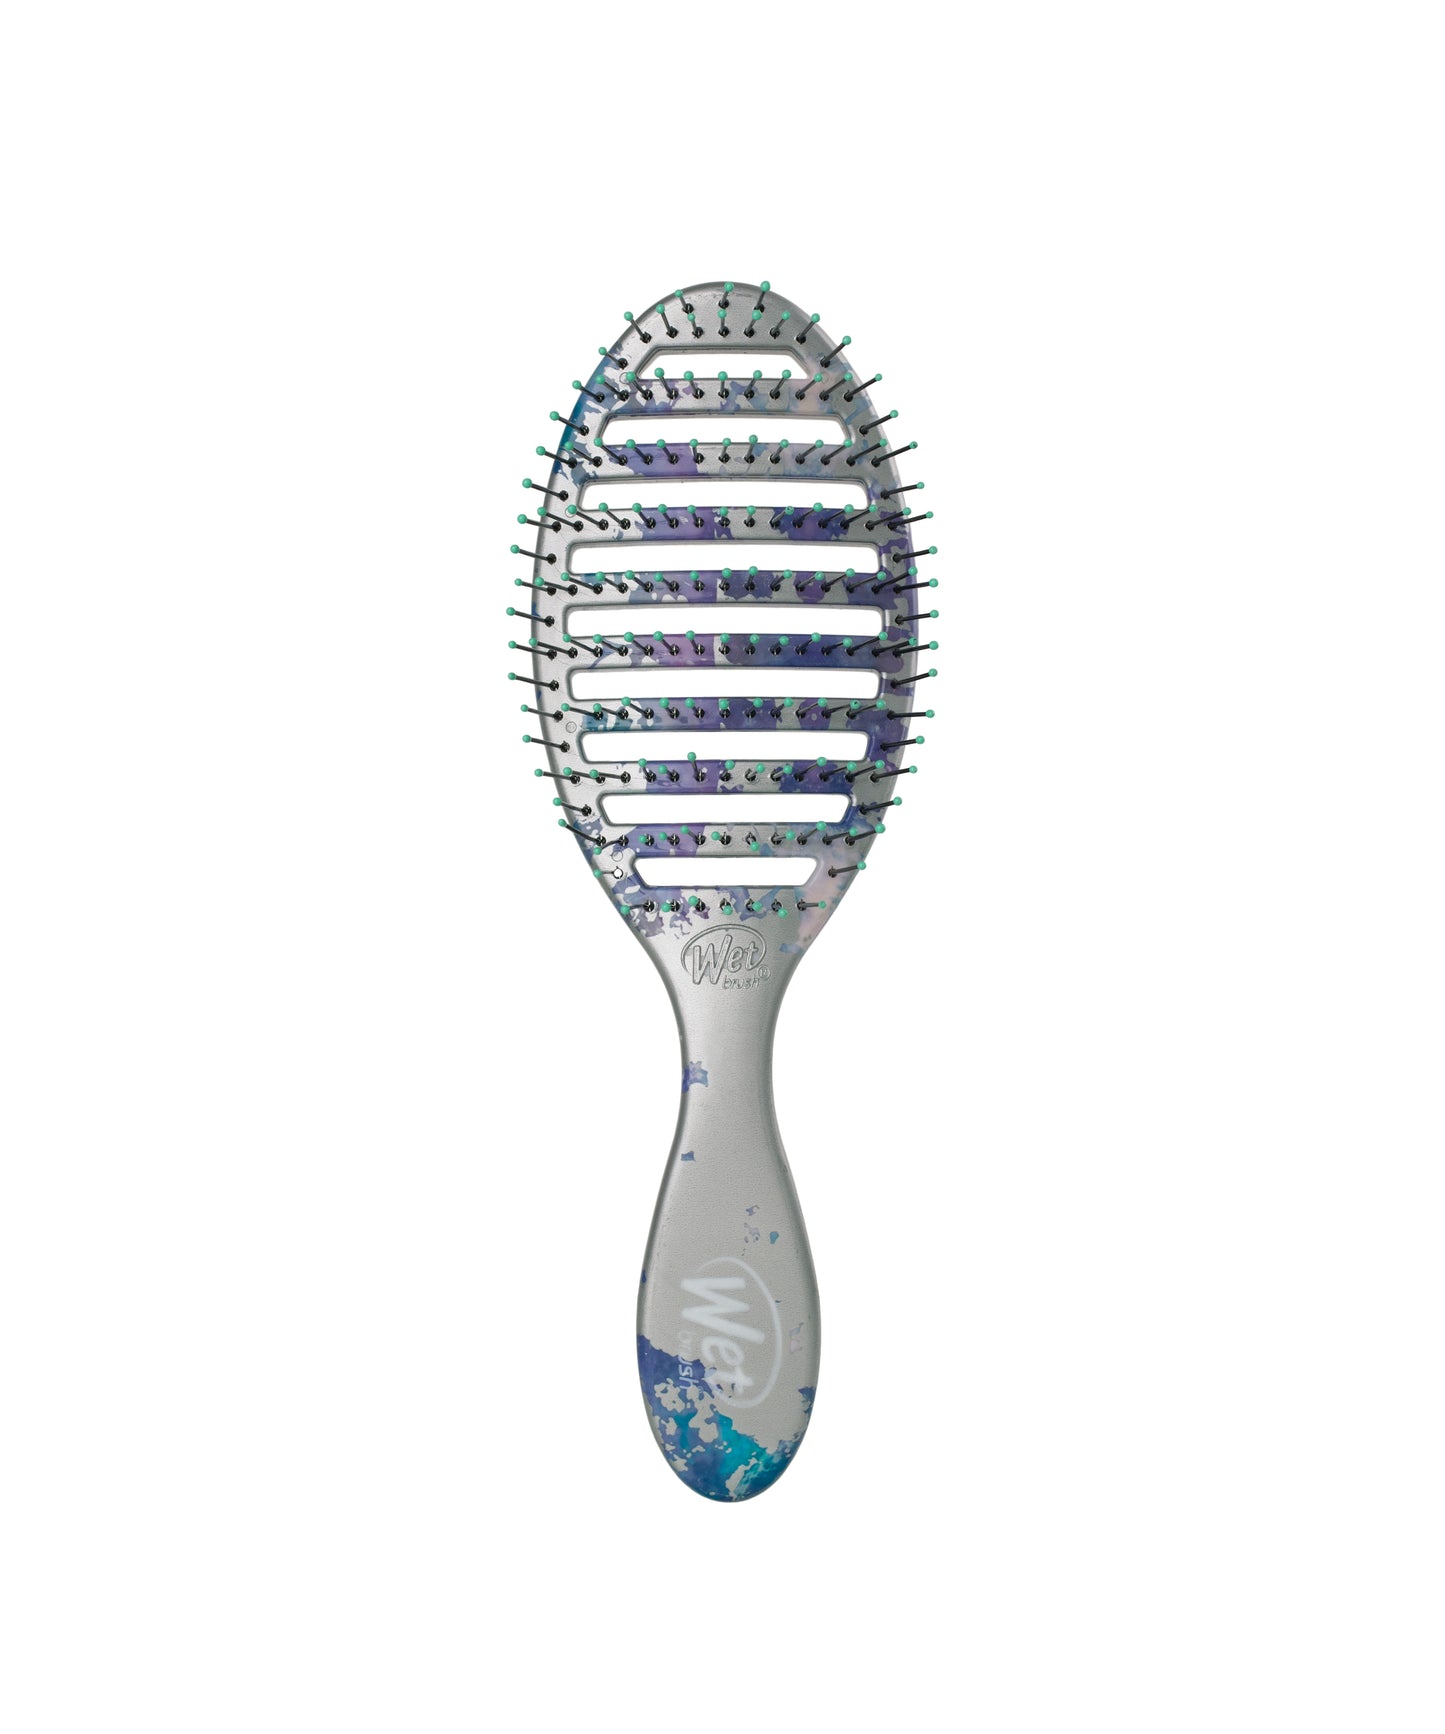 Wet Brush Limited Edition Stellar Skies Speed Dry Detangle Hair Brush - Turquoise Skies